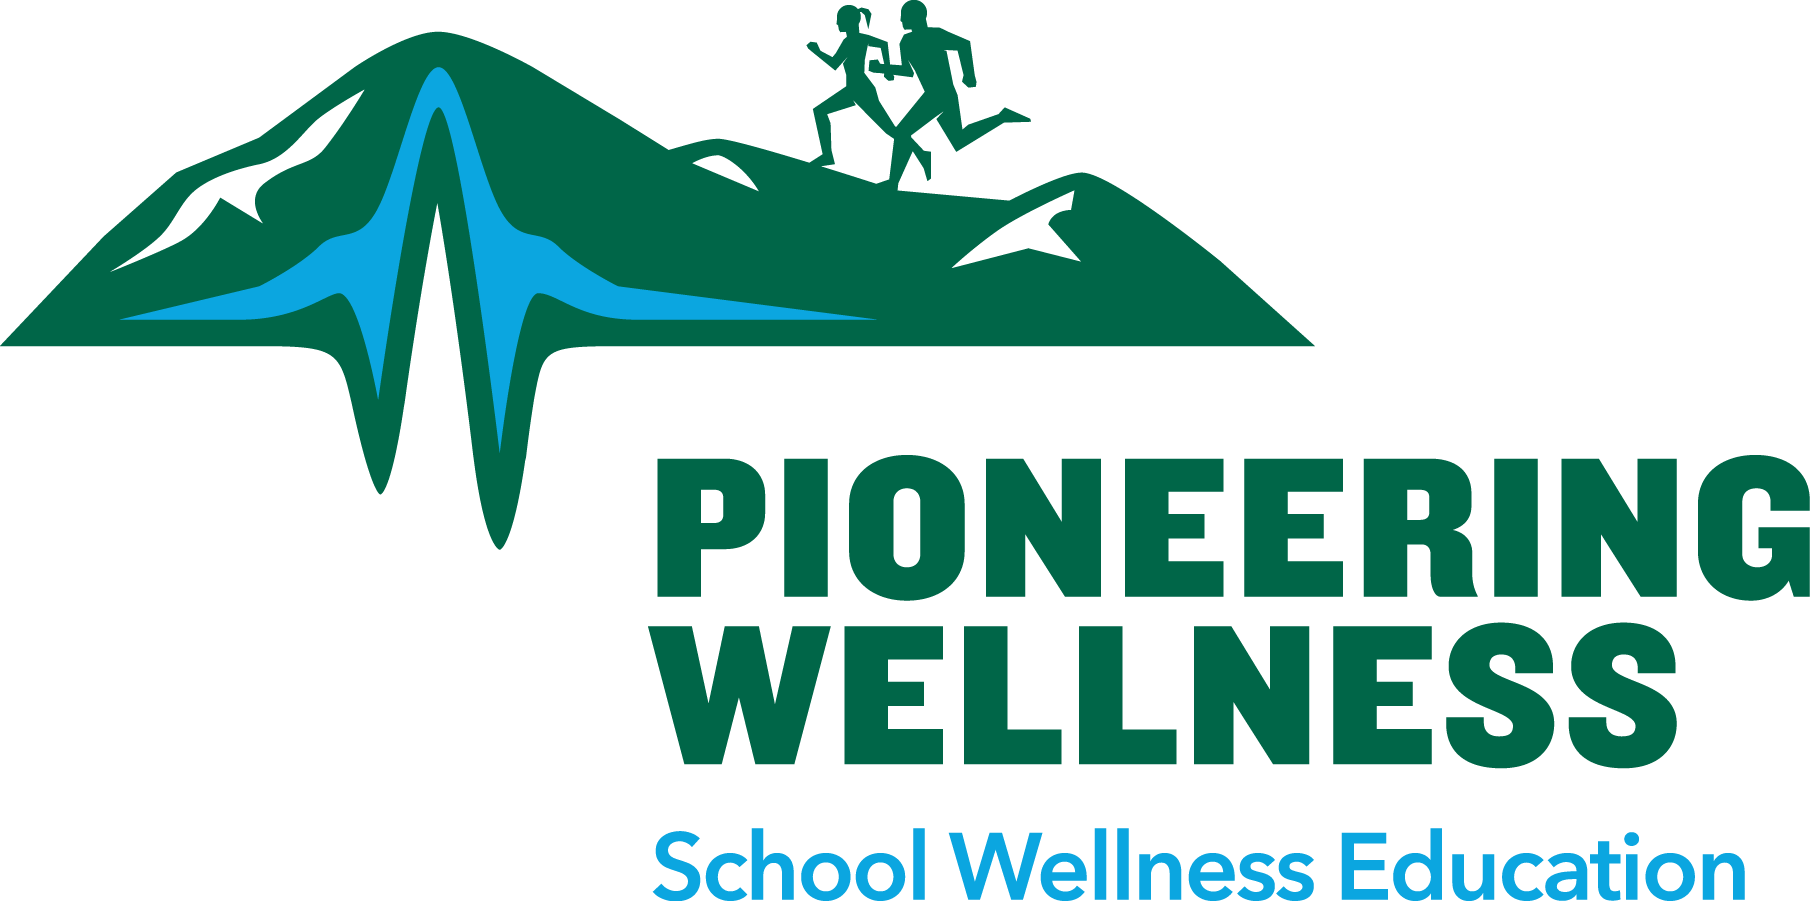 Pioneering wellness logo